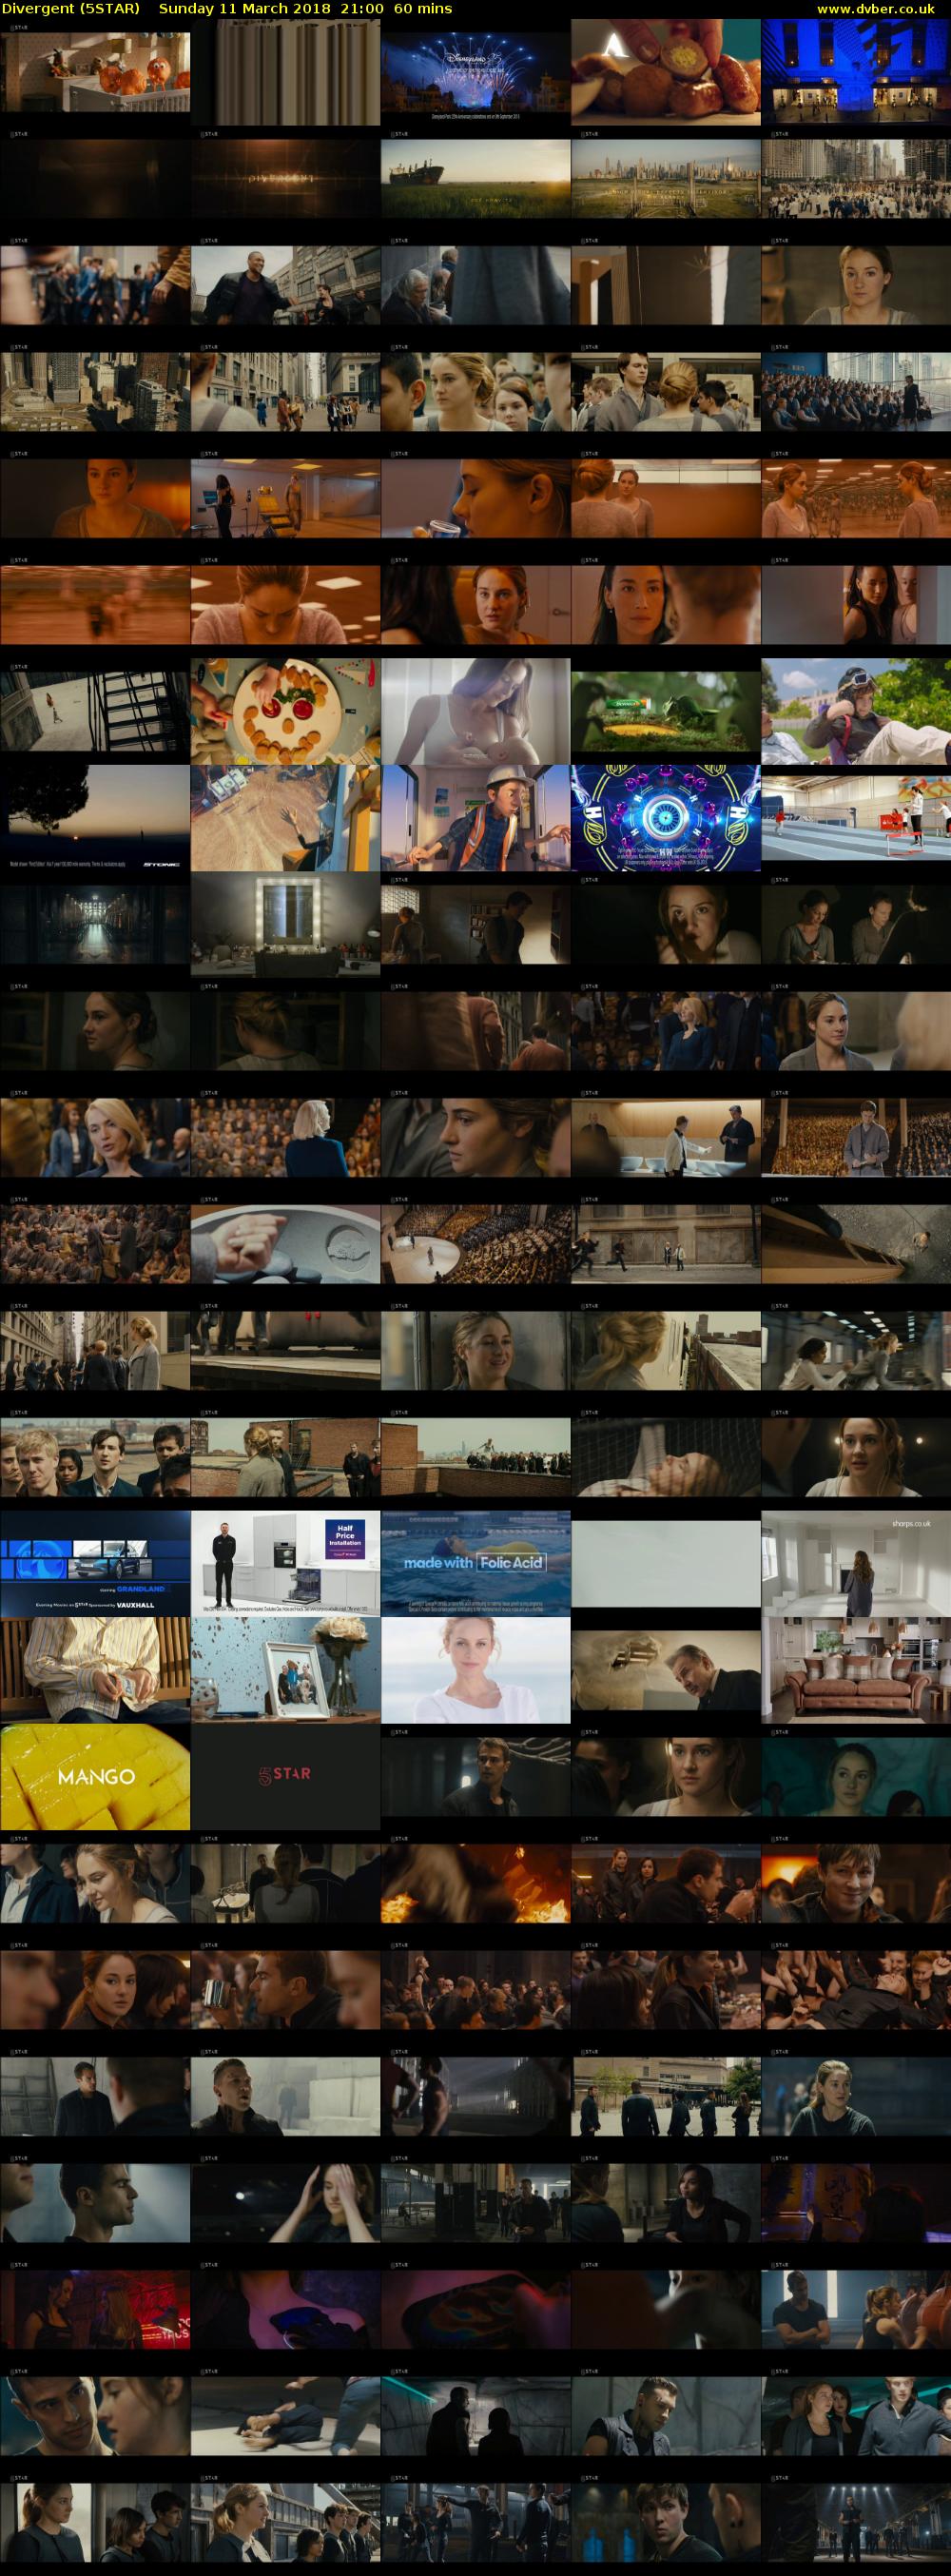 Divergent (5STAR) Sunday 11 March 2018 21:00 - 22:00